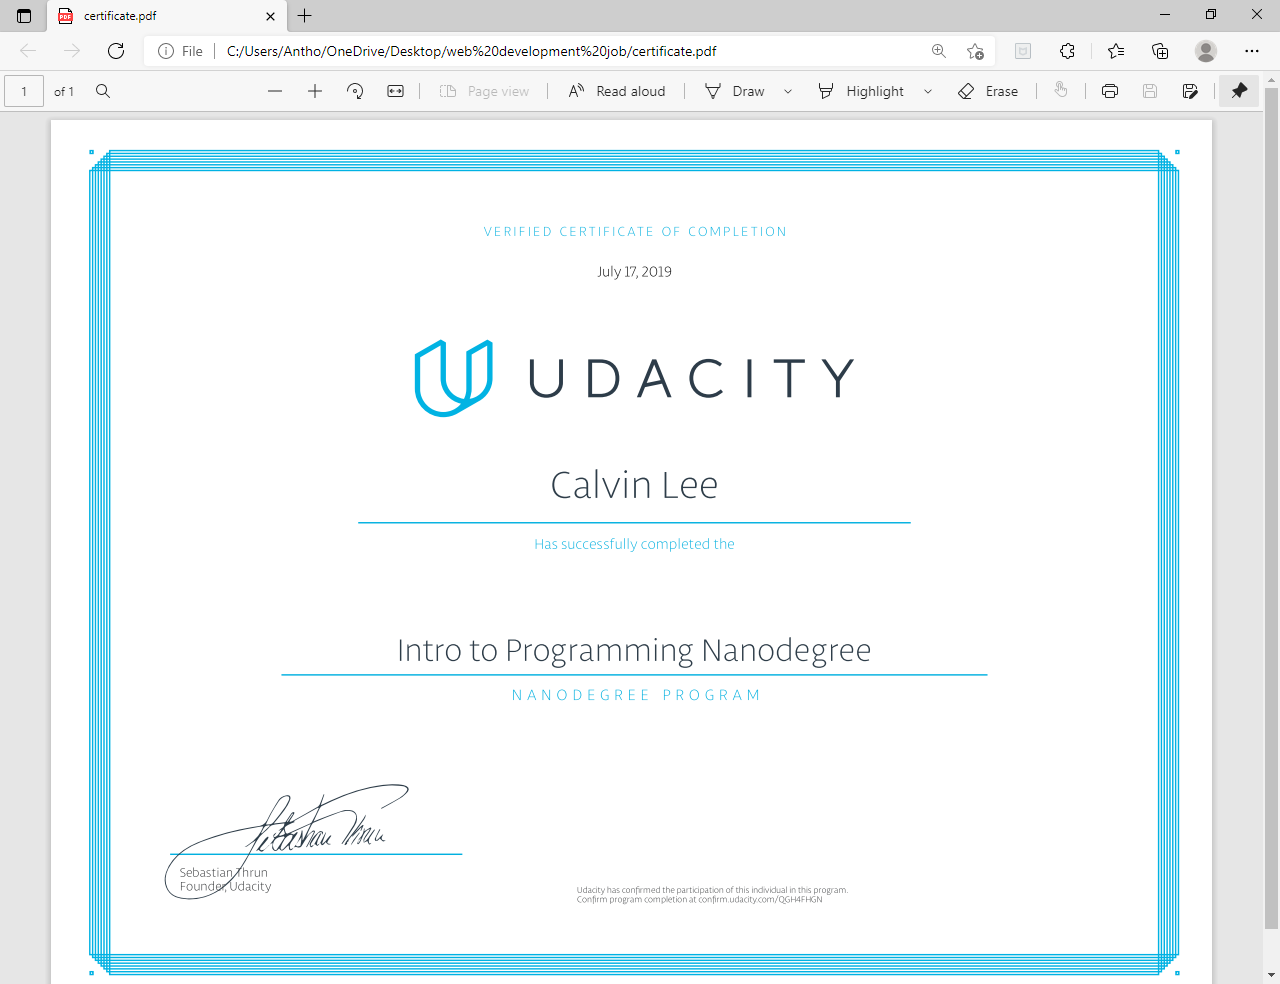 Udacity certificate